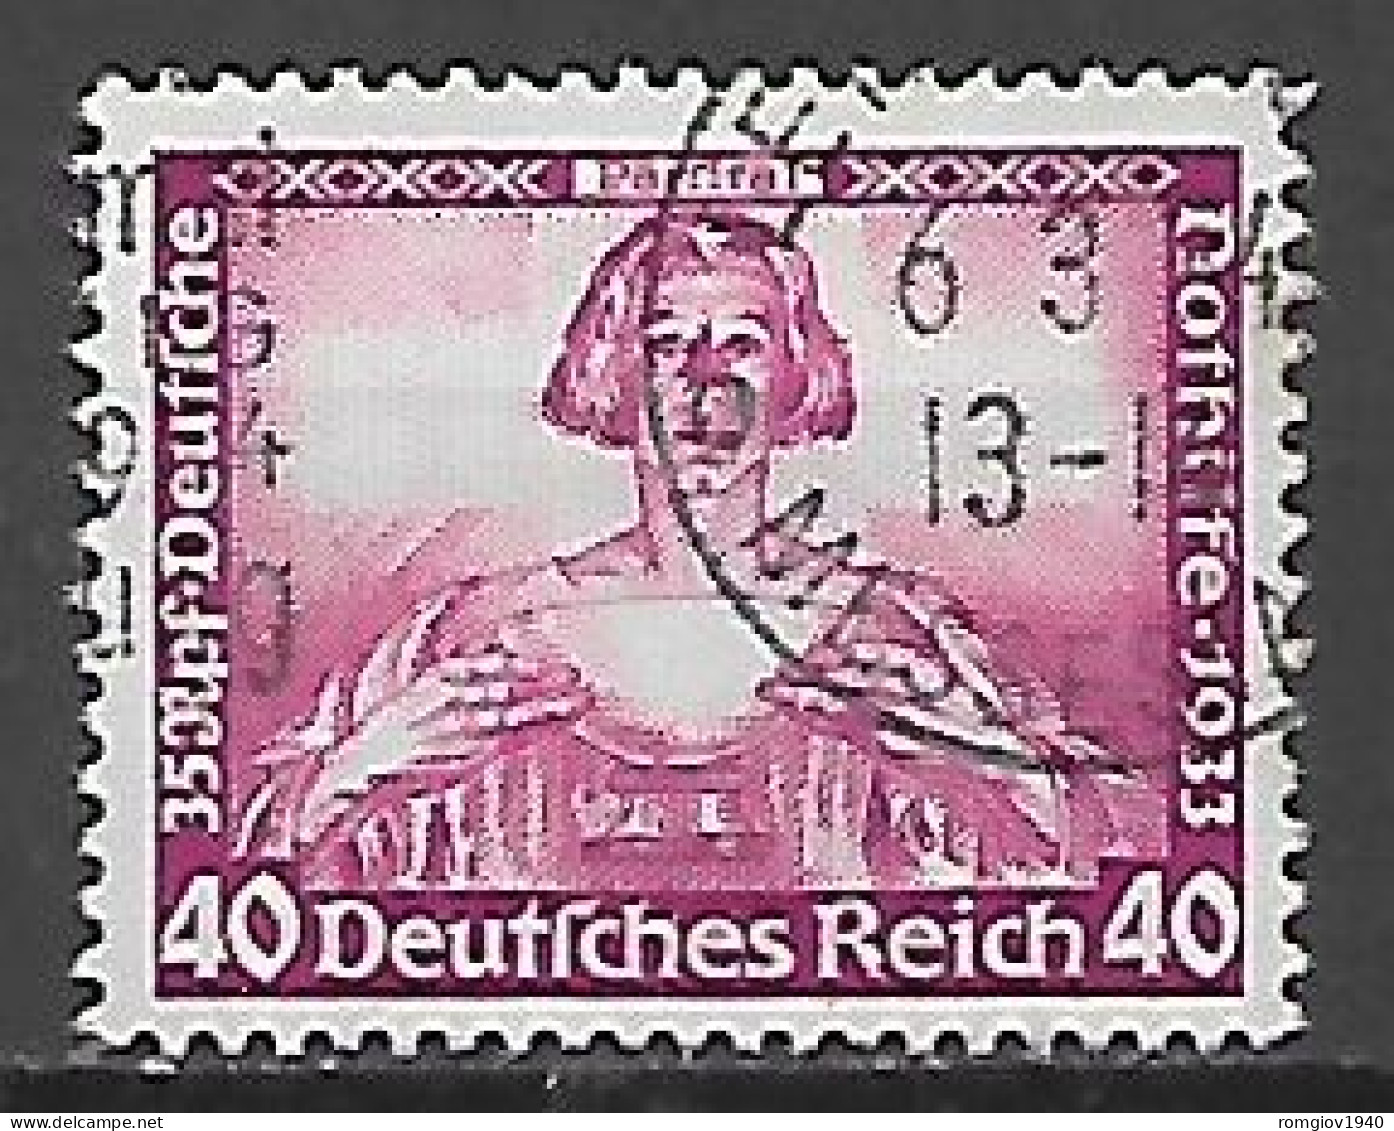 GERMANIA REICH TERZO REICH 1933 OPERE MUSICALI DI WAGNER UNIF.478  USATO VF - Oblitérés